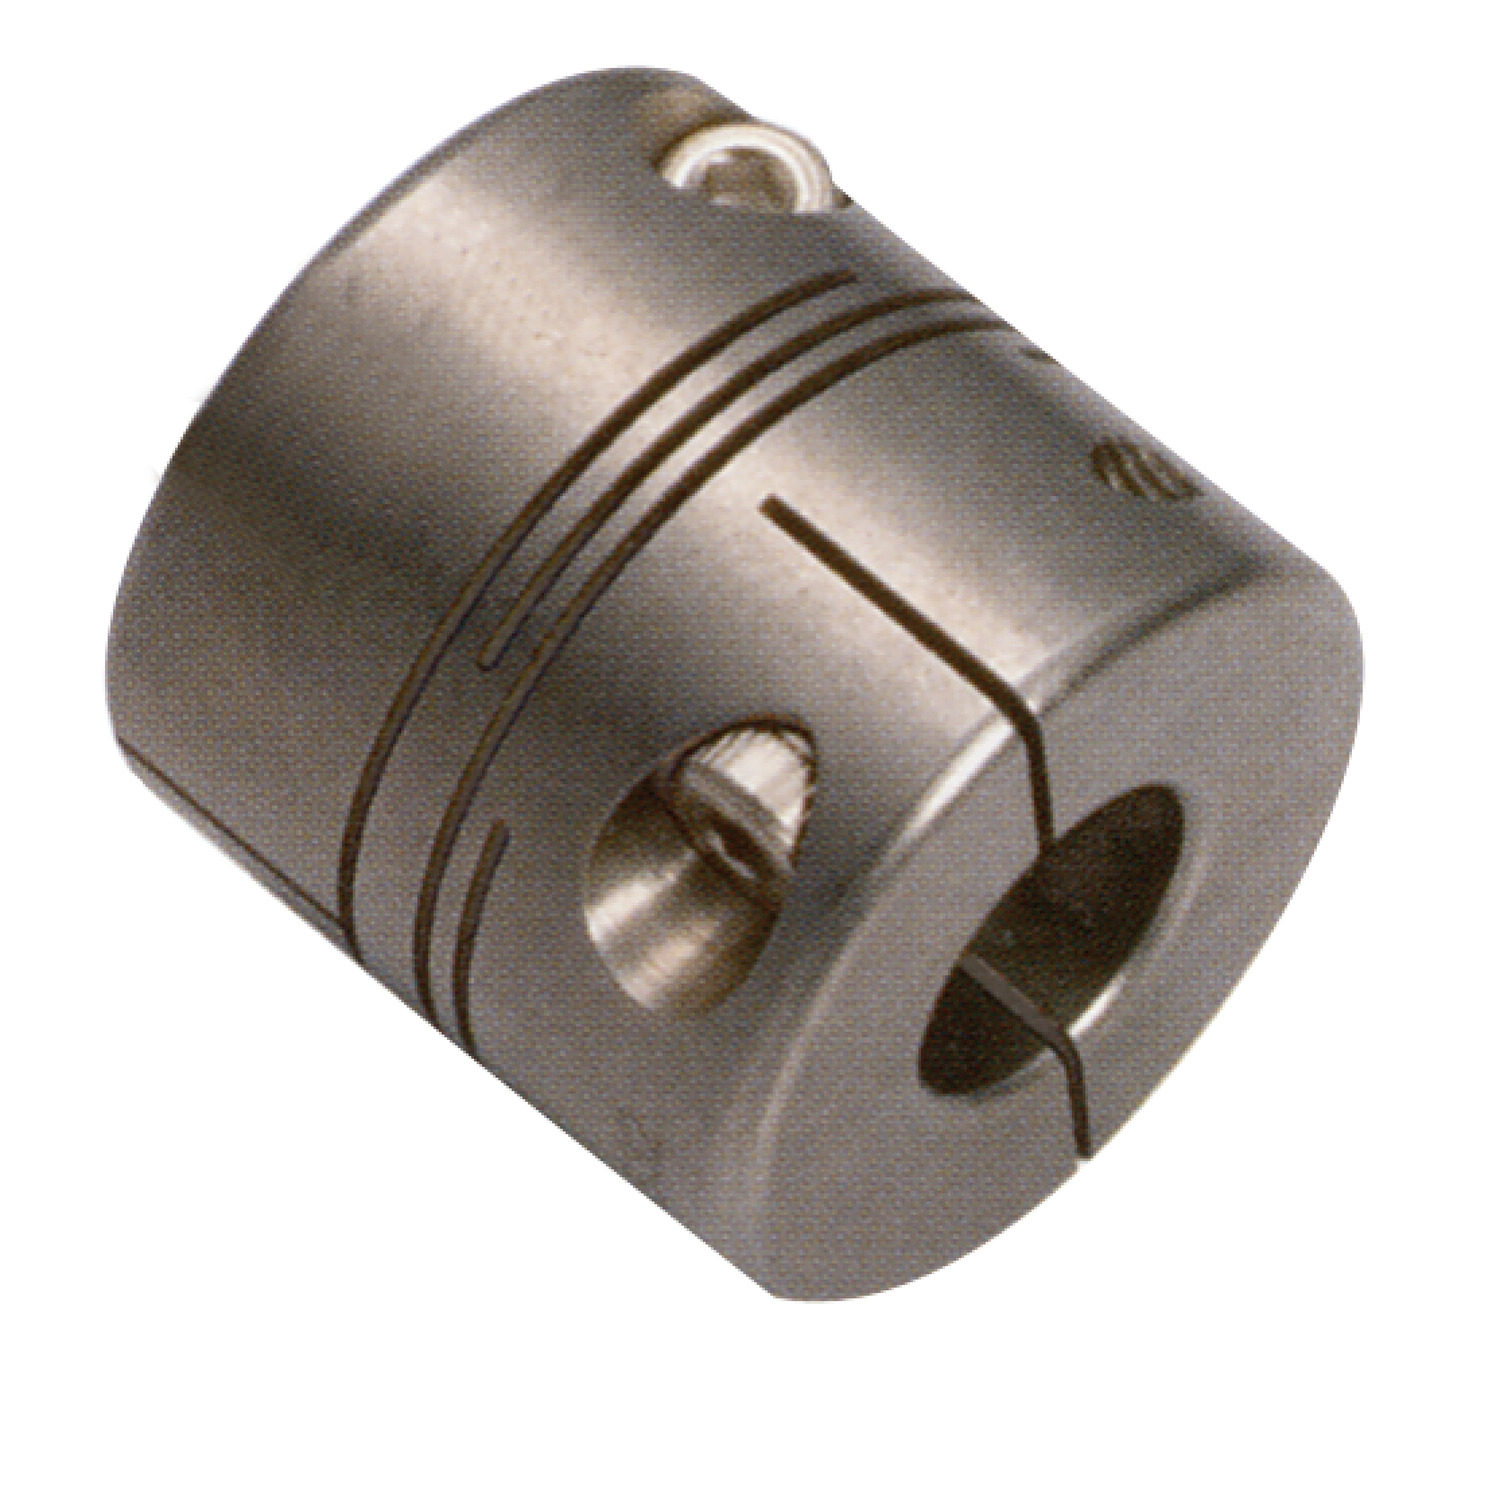 Product R3006, Beamed Coupling - three beam aluminium, set screw type / 